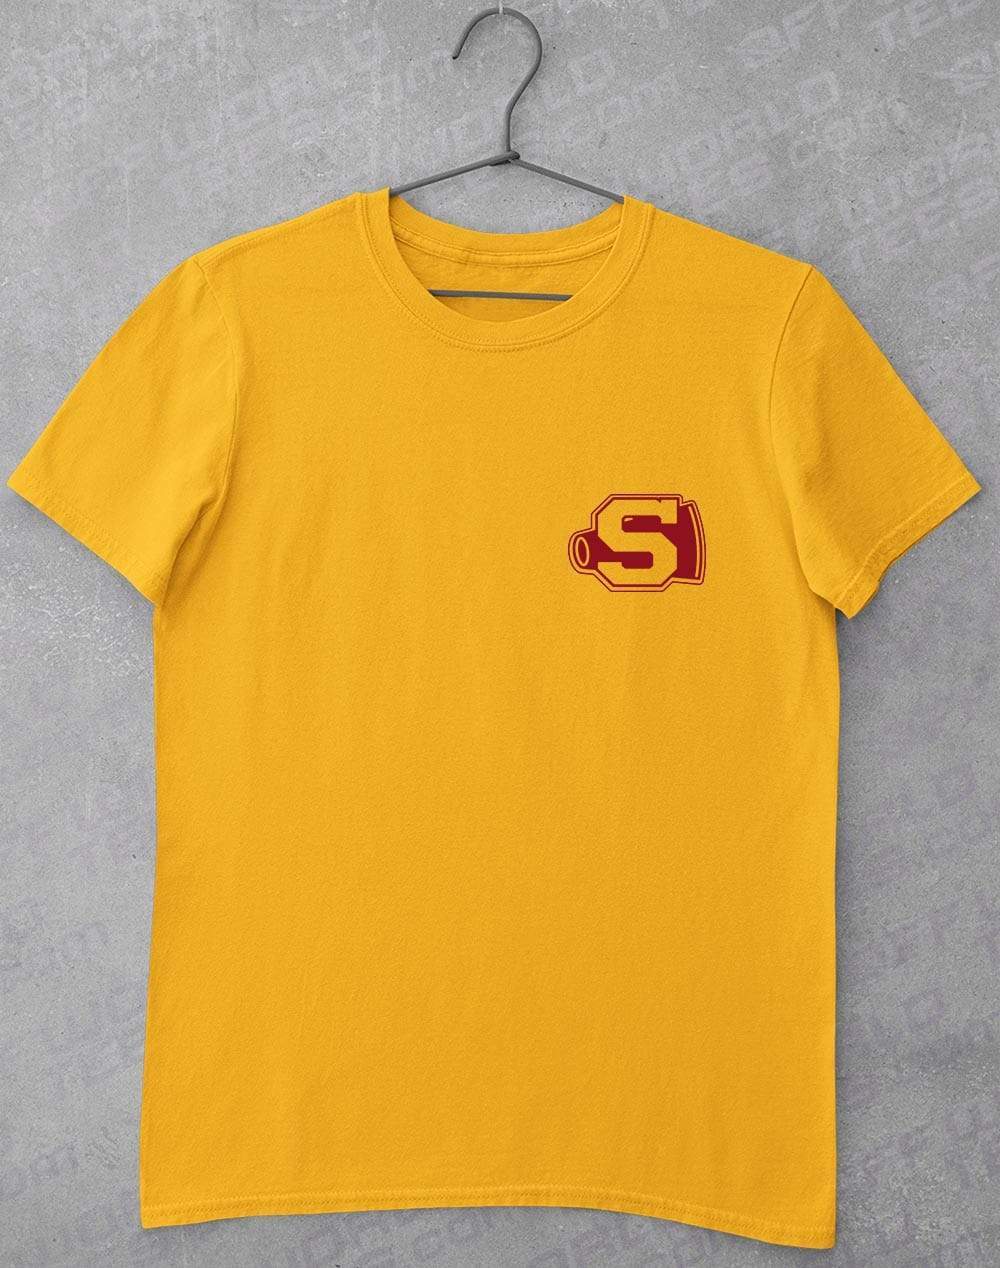 Pocket Print Sunnydale Cheerleader T-Shirt S / Gold  - Off World Tees